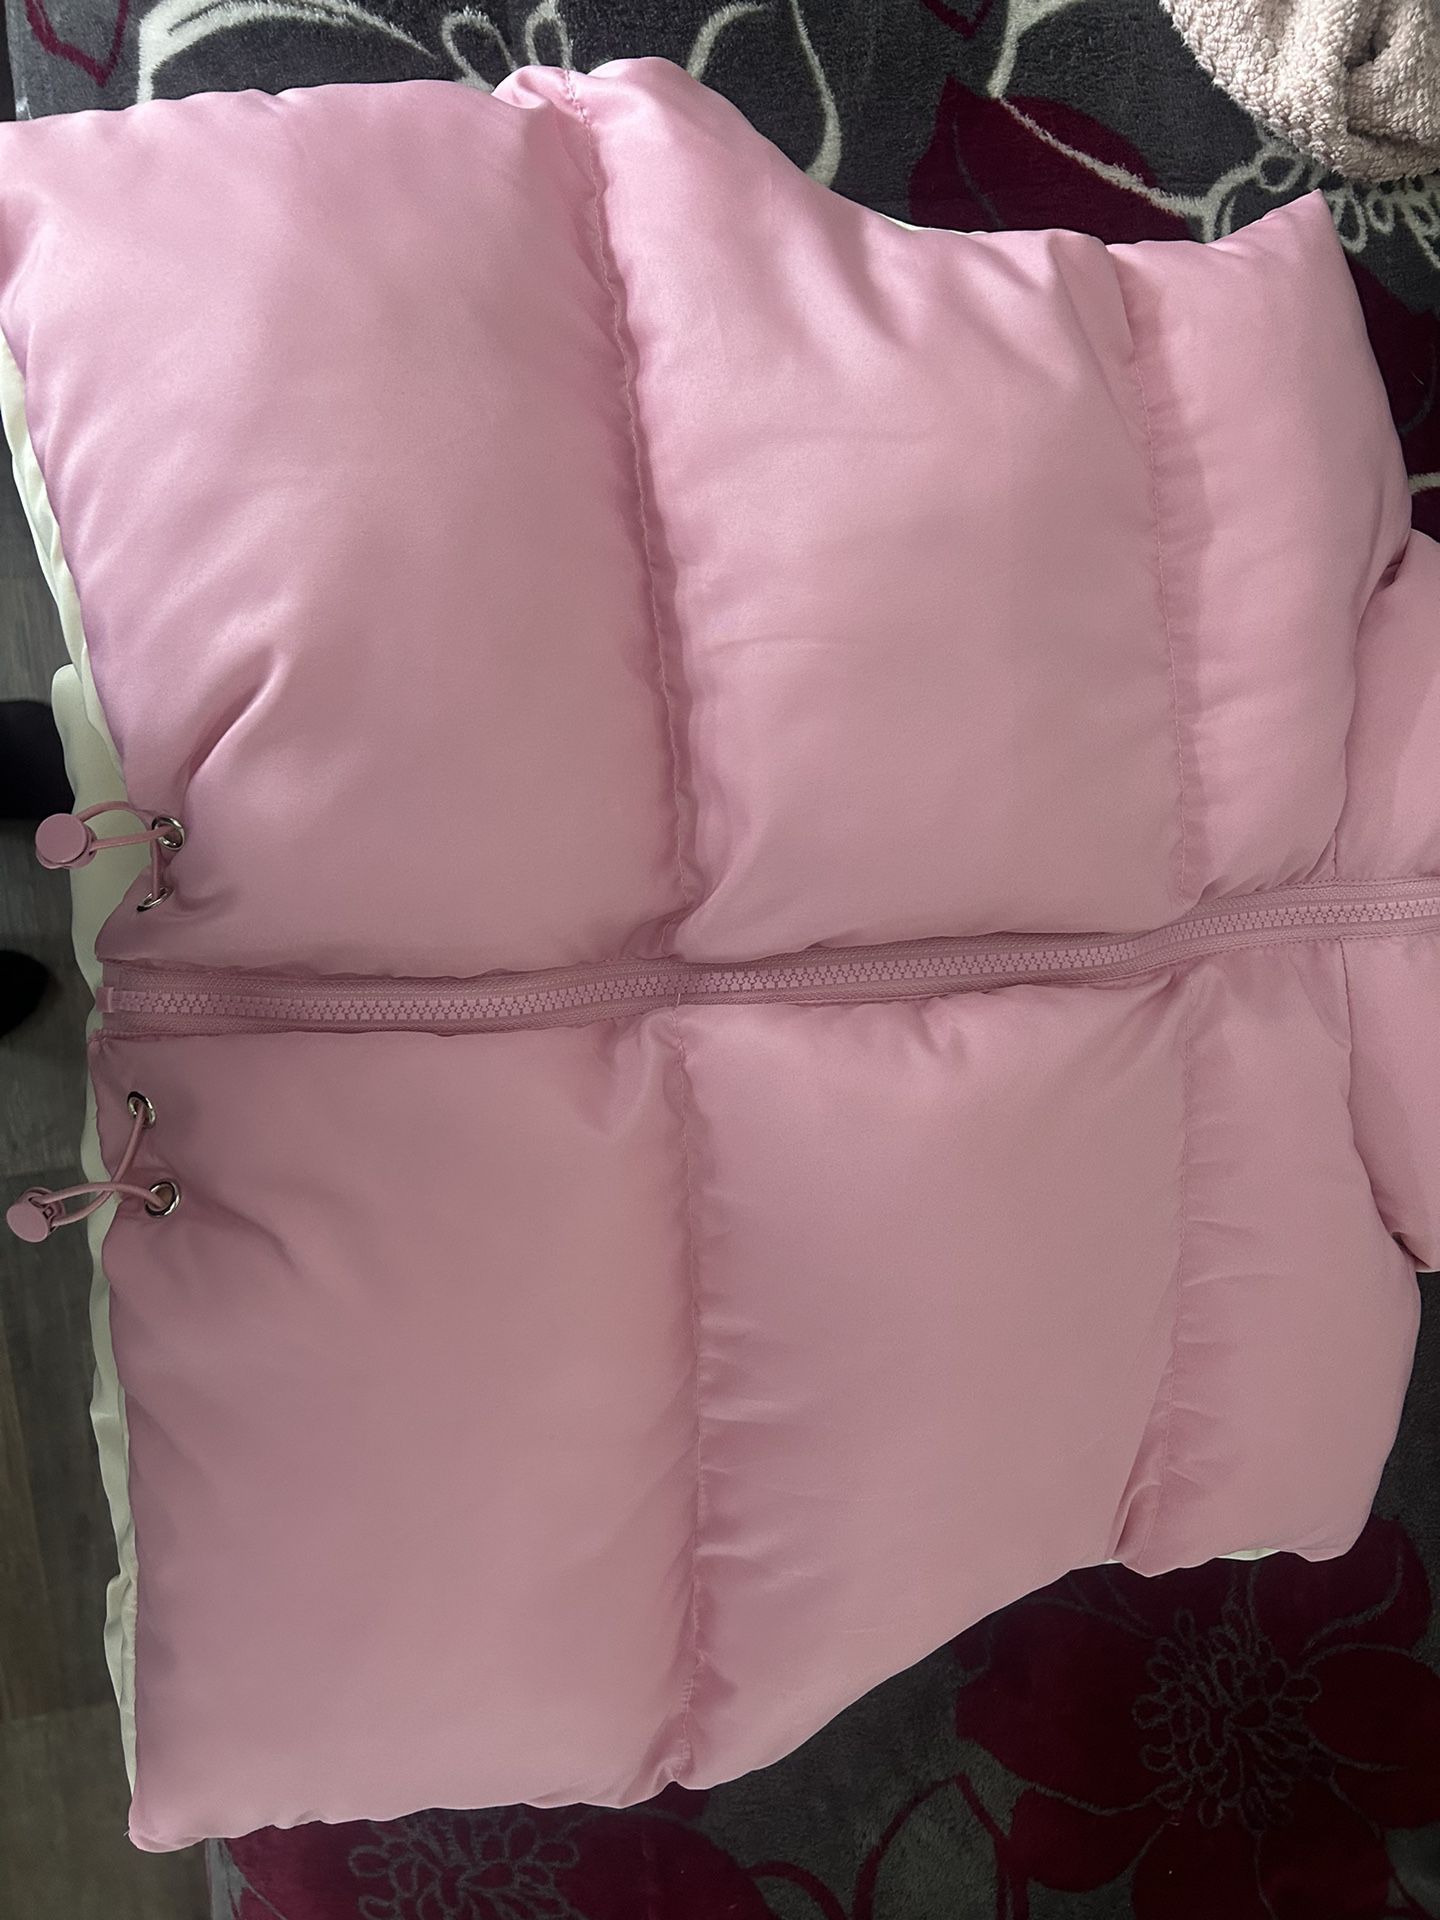 Pink Puffer Vest 